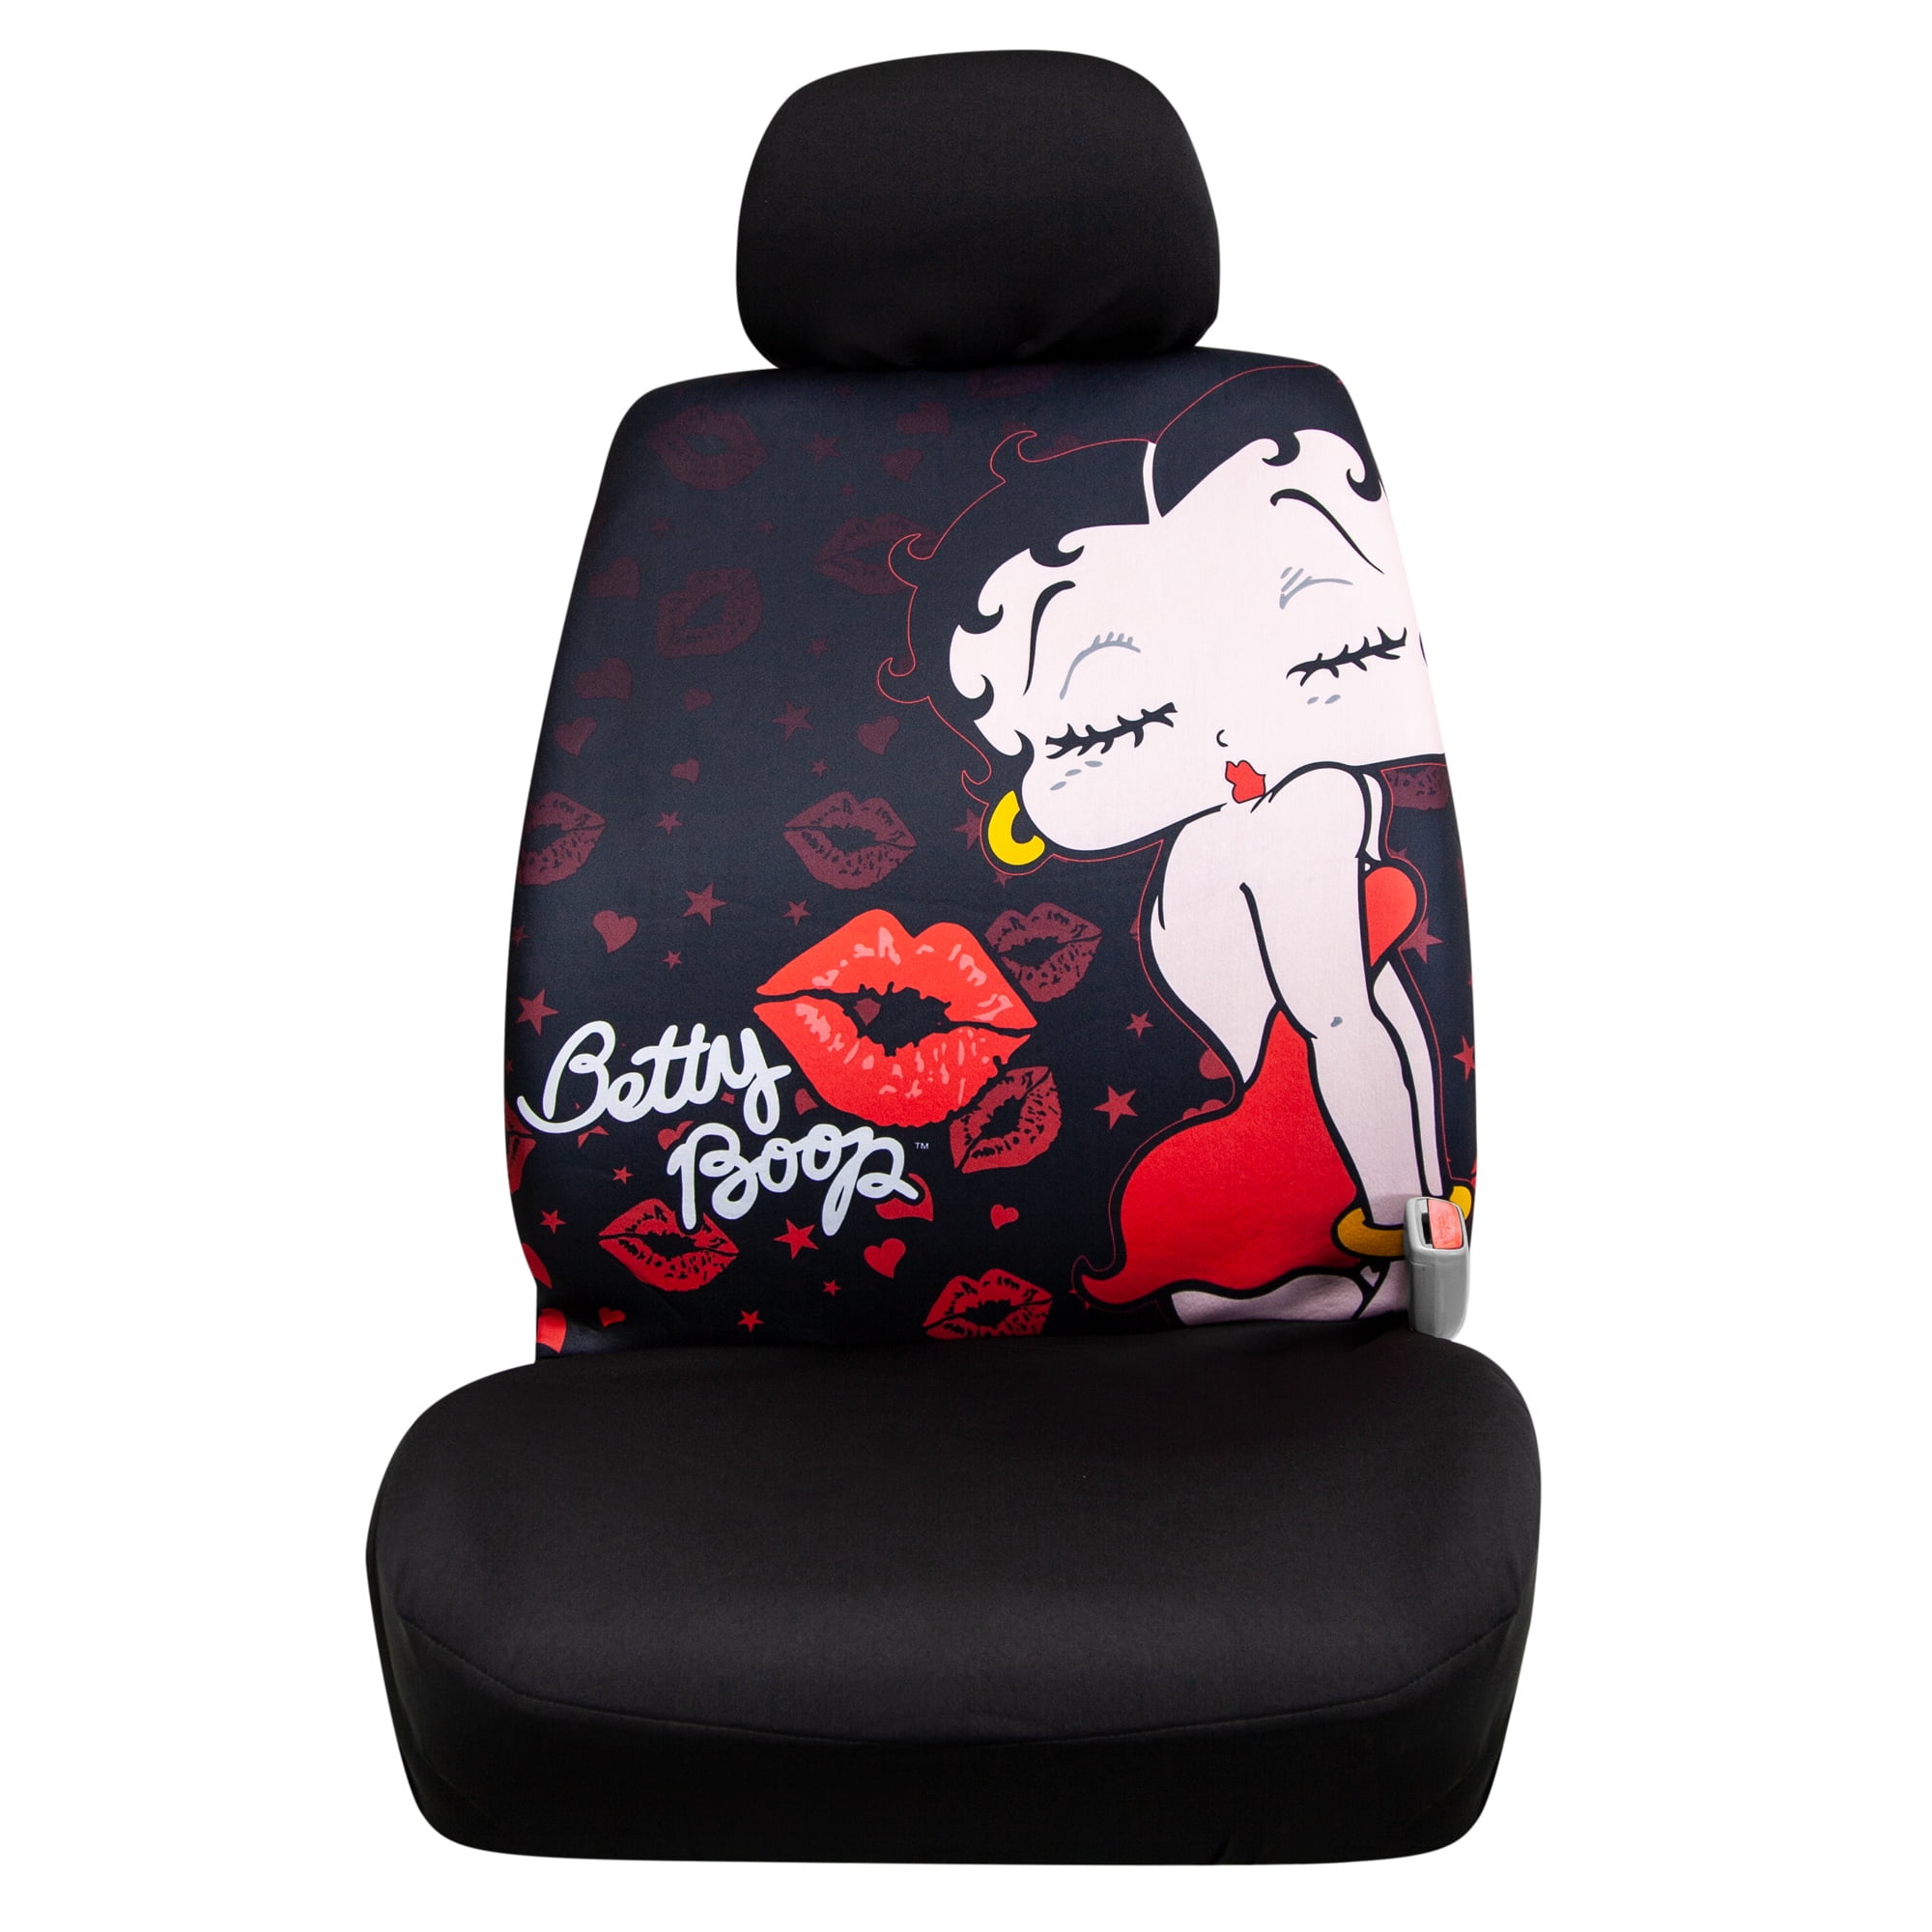 Betty Boop Car Seat Accessories Nonslip Car Seat Cover Car Seat Protectors Tire Tracks Car Seat Accessories Fit Most Vehicle,Sedan,Truck,Van 2 Pcs 